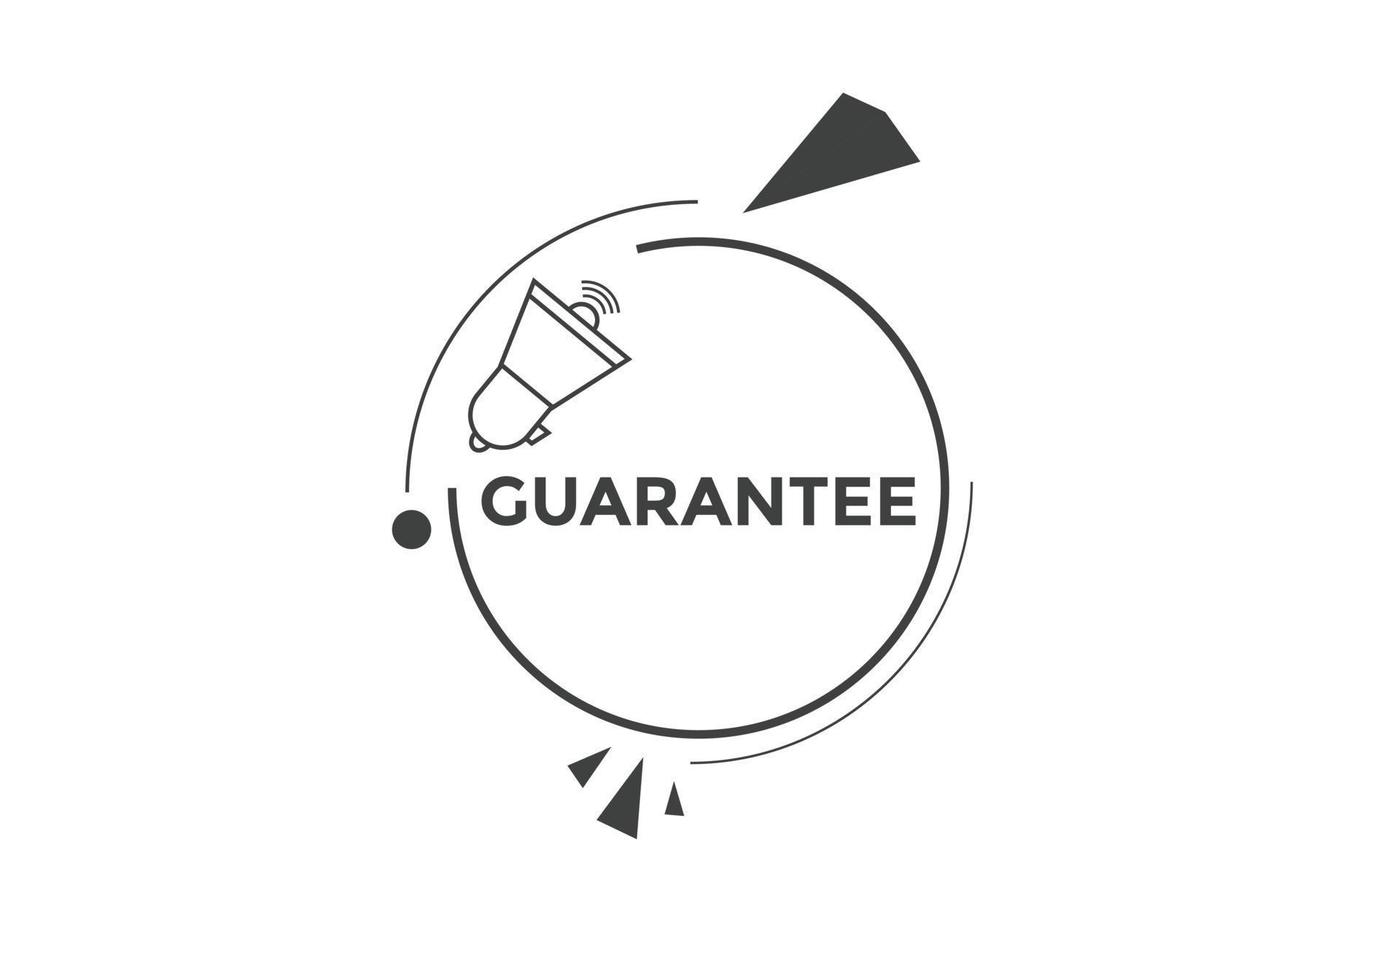 guarantee button. speech bubble. guarantee Colorful web banner. vector illustration. guarantee label sign template